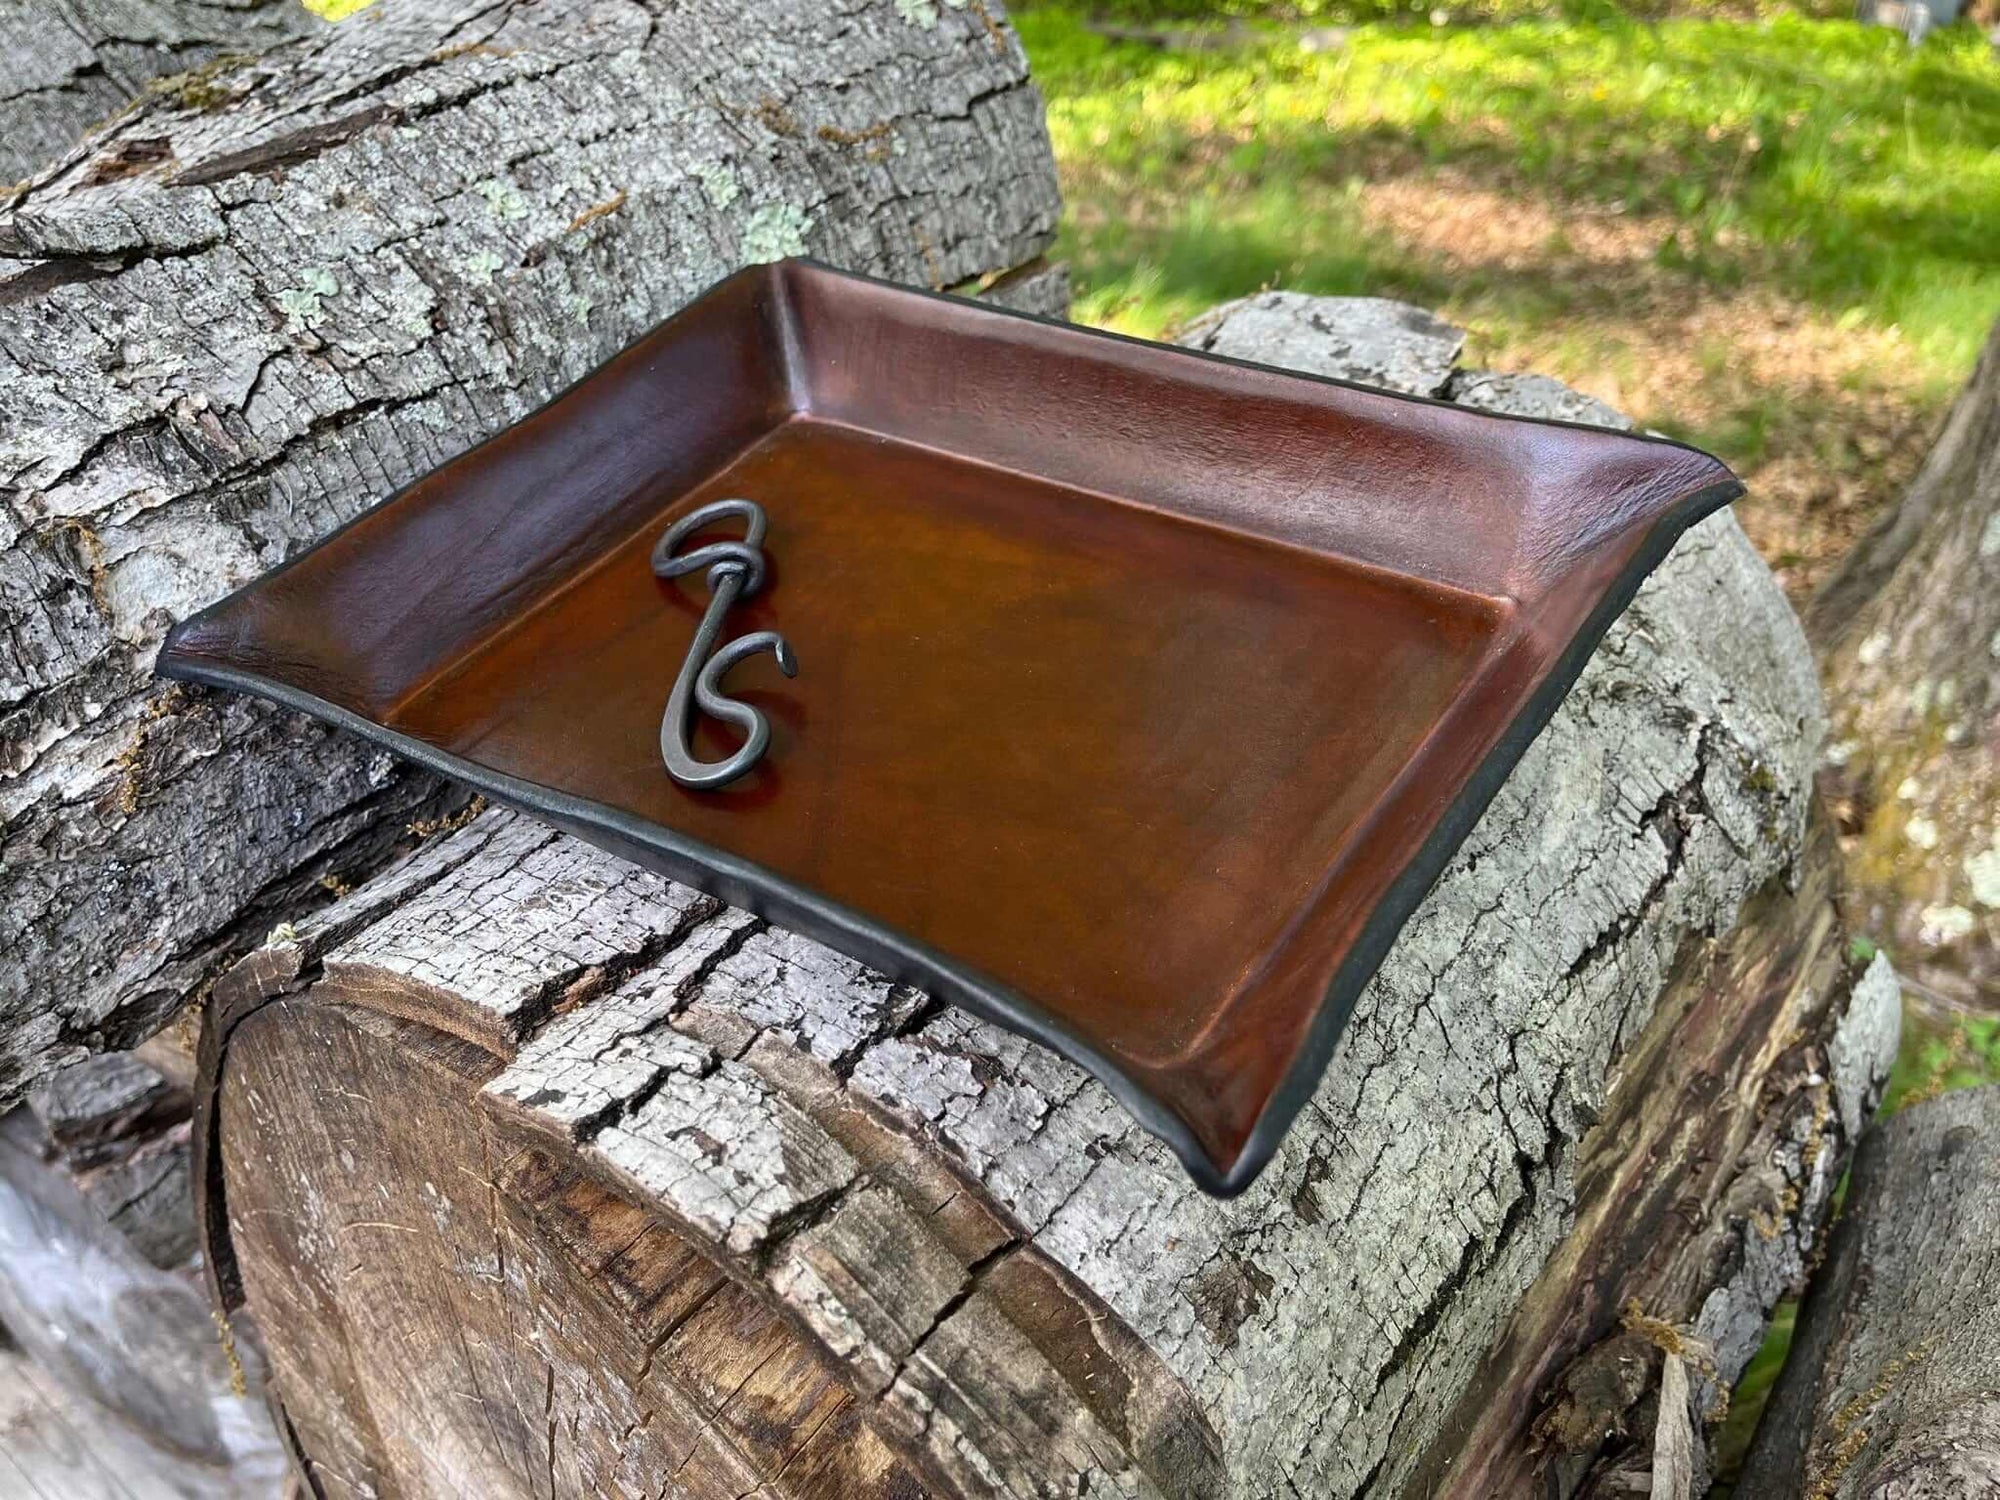 Medium leather valet tray. Dark brown